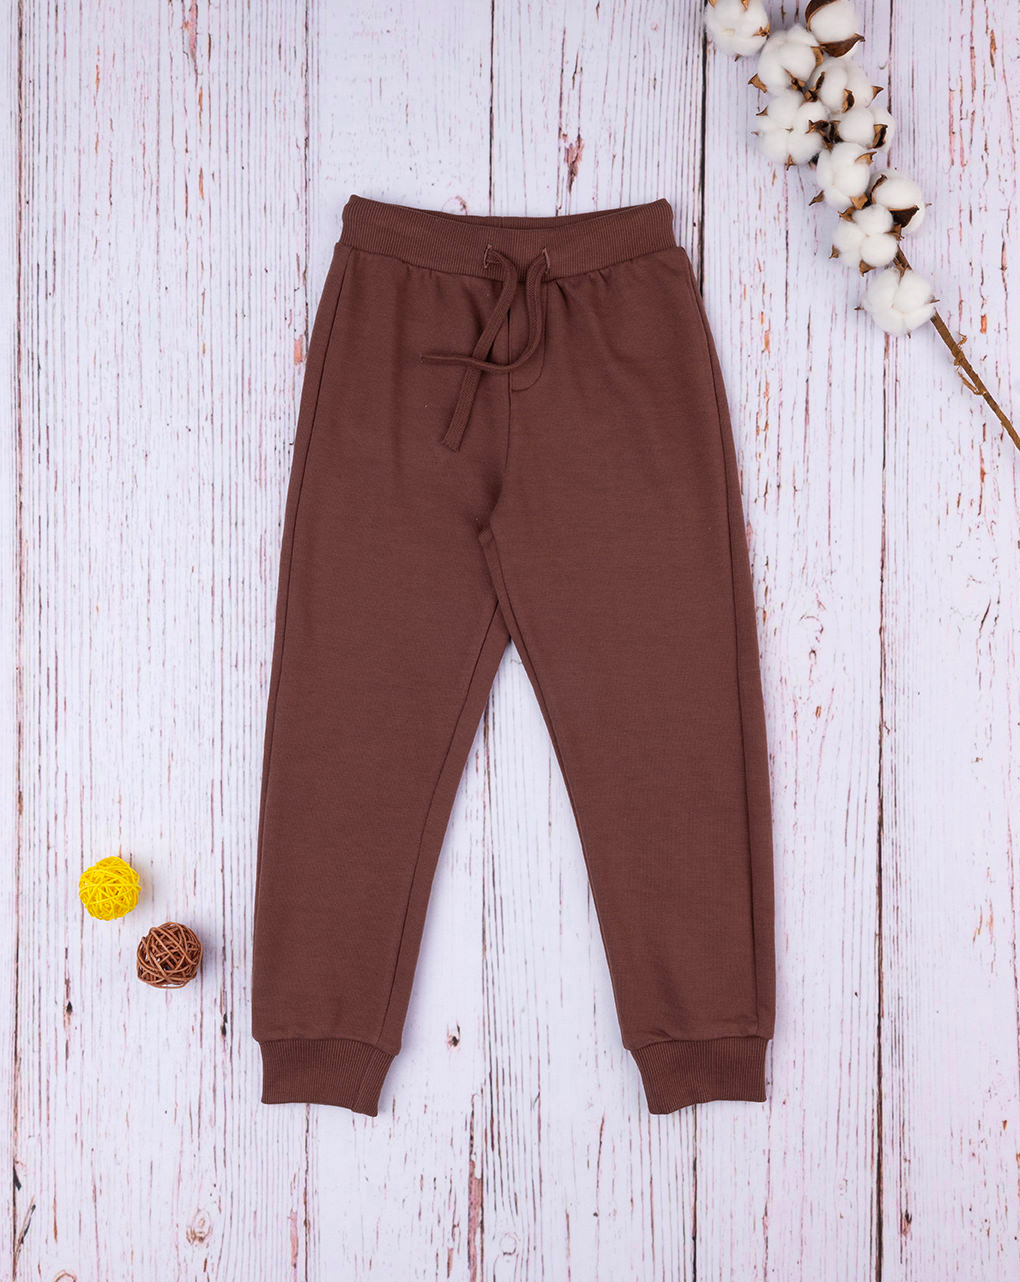 Pantalones marrones de niño - Prénatal